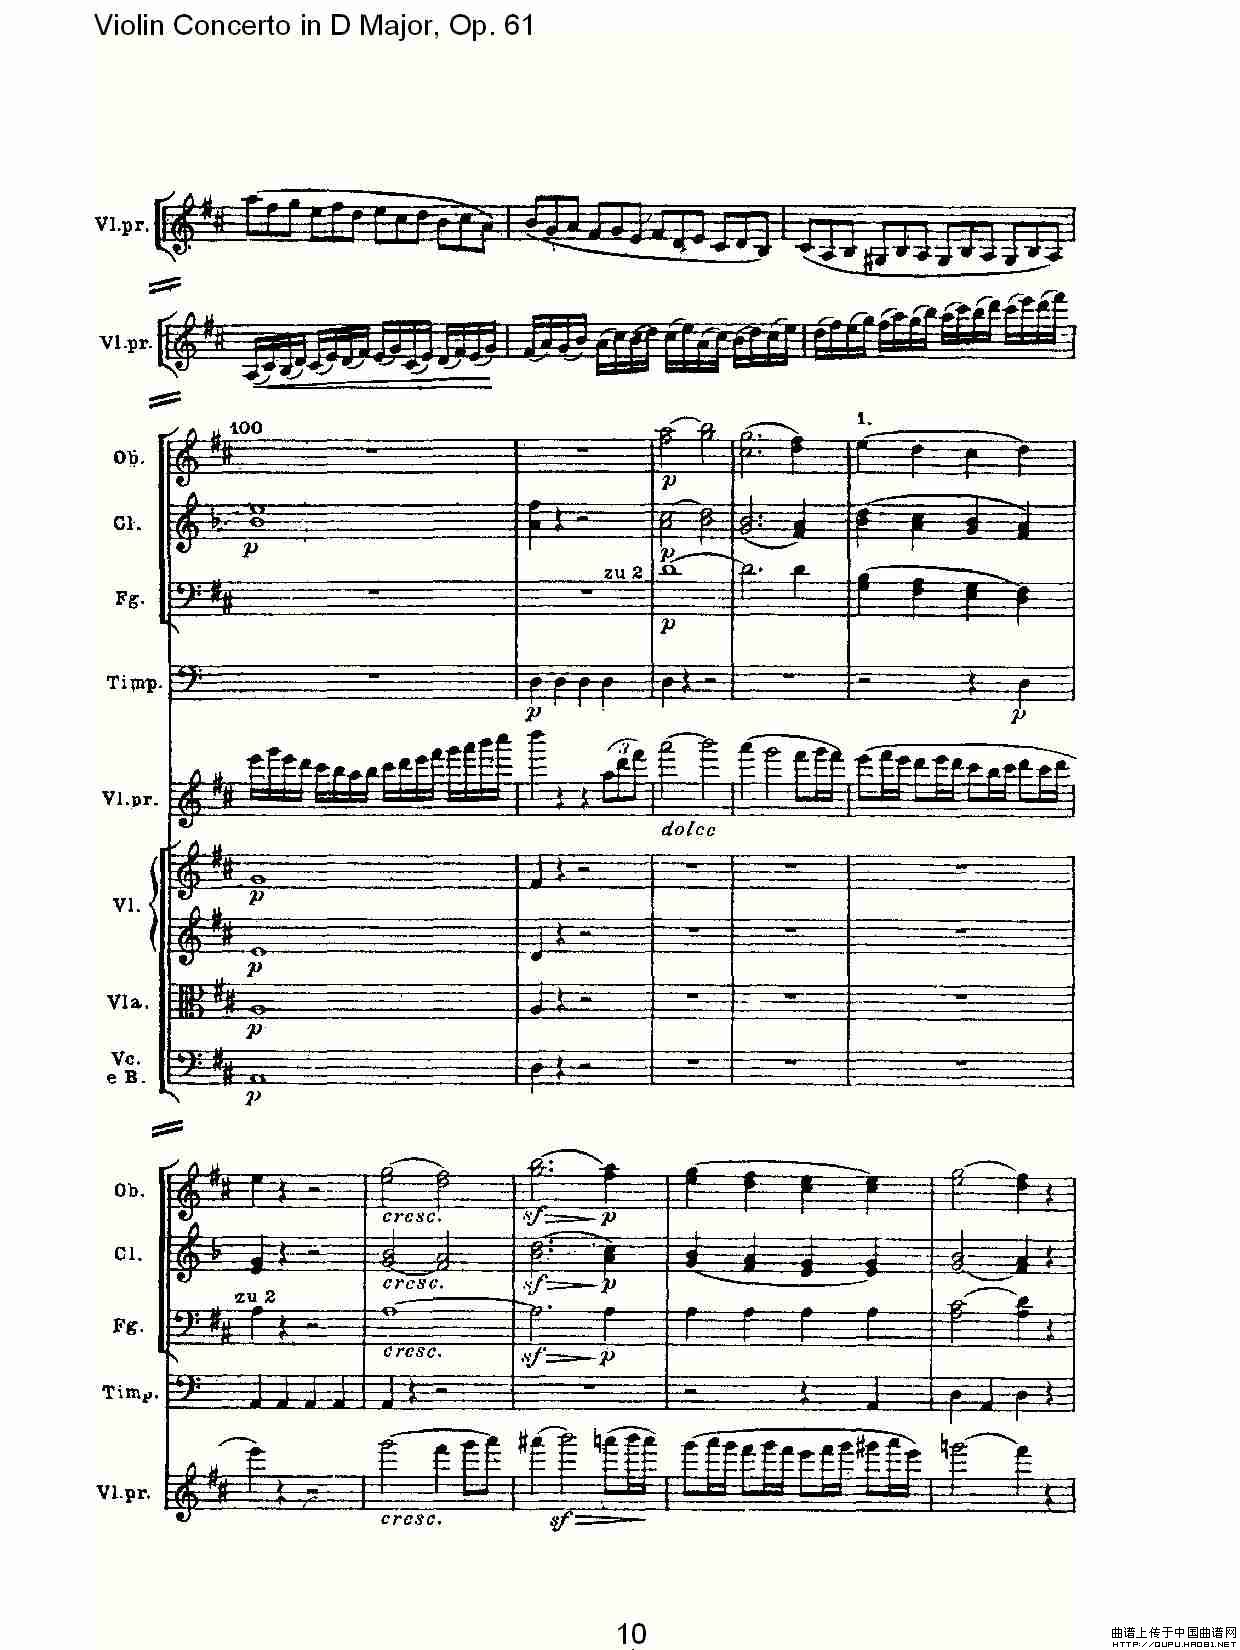 D大调小提琴协奏曲 Op.61第一乐章（一）